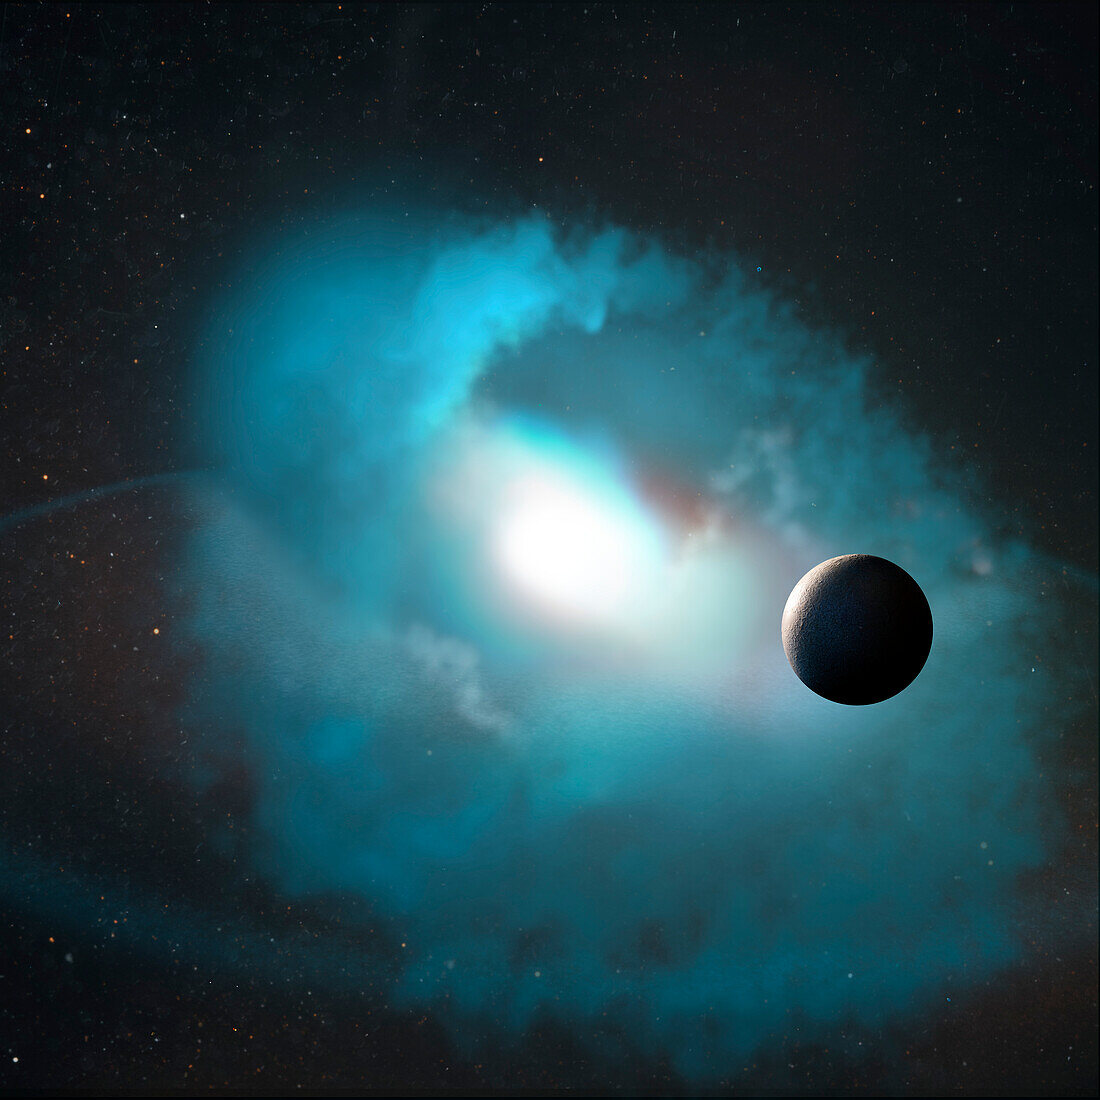 Exoplanet, composite image